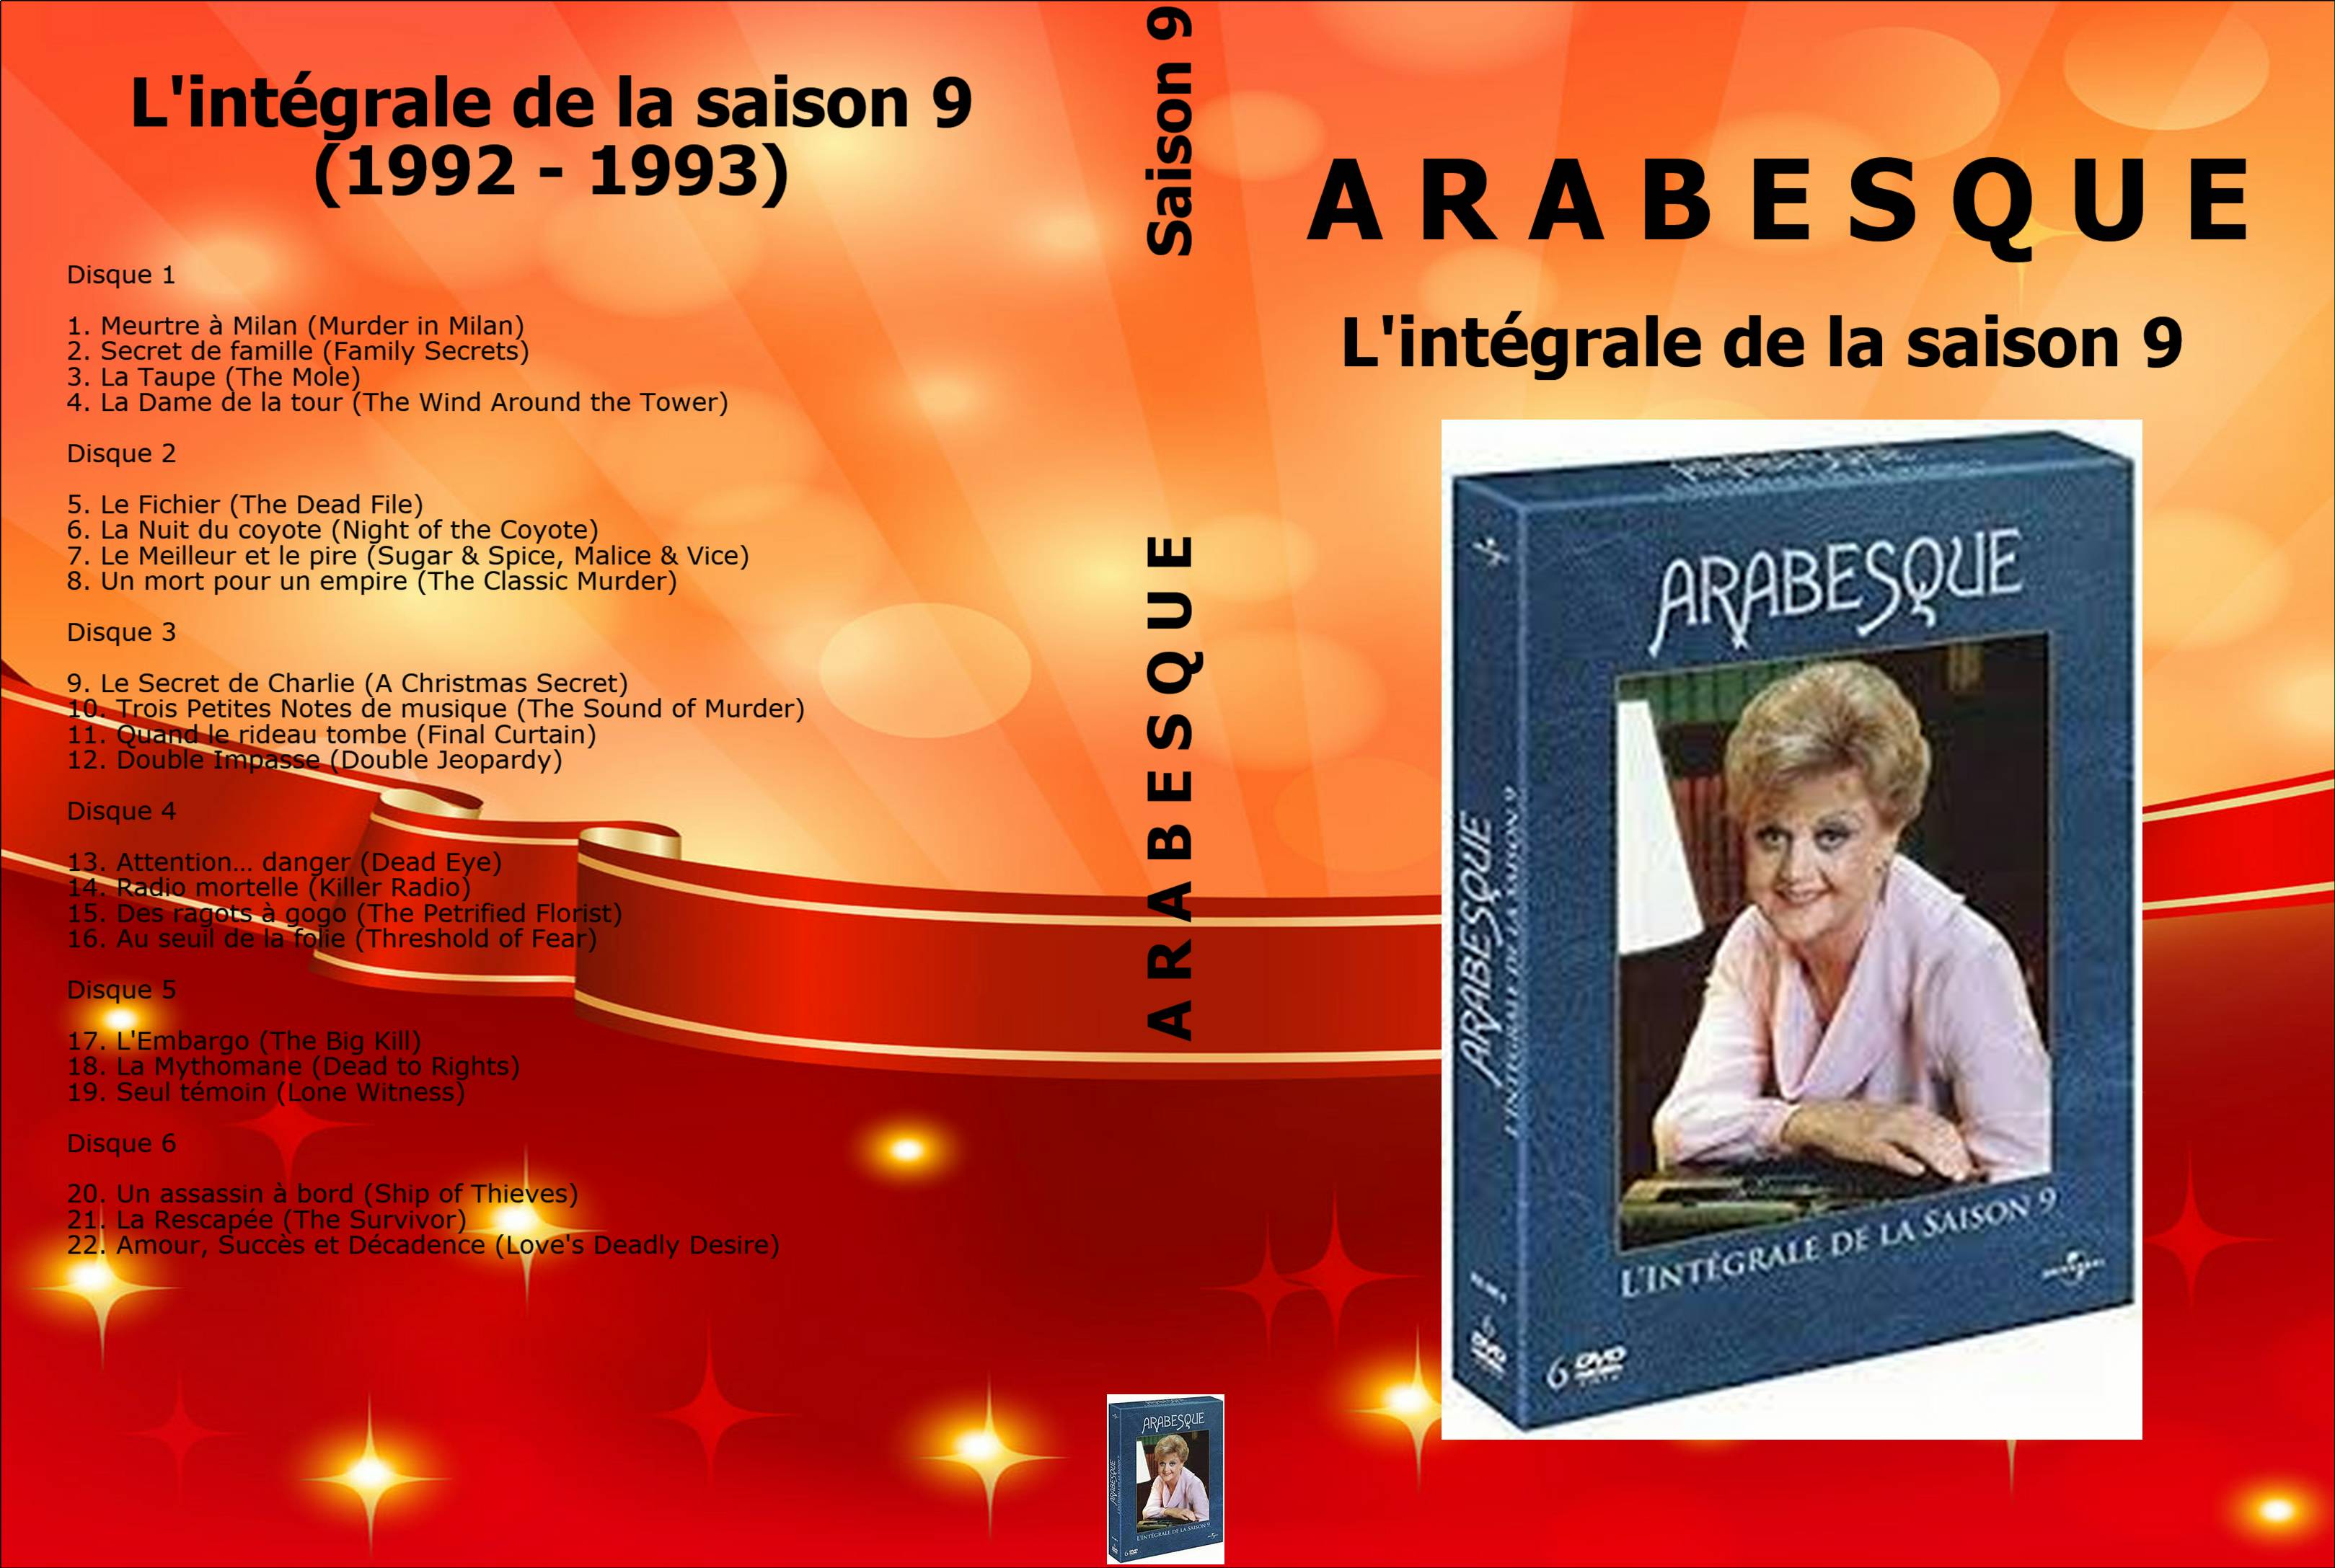 Jaquette DVD Arabesque saison 9 custom